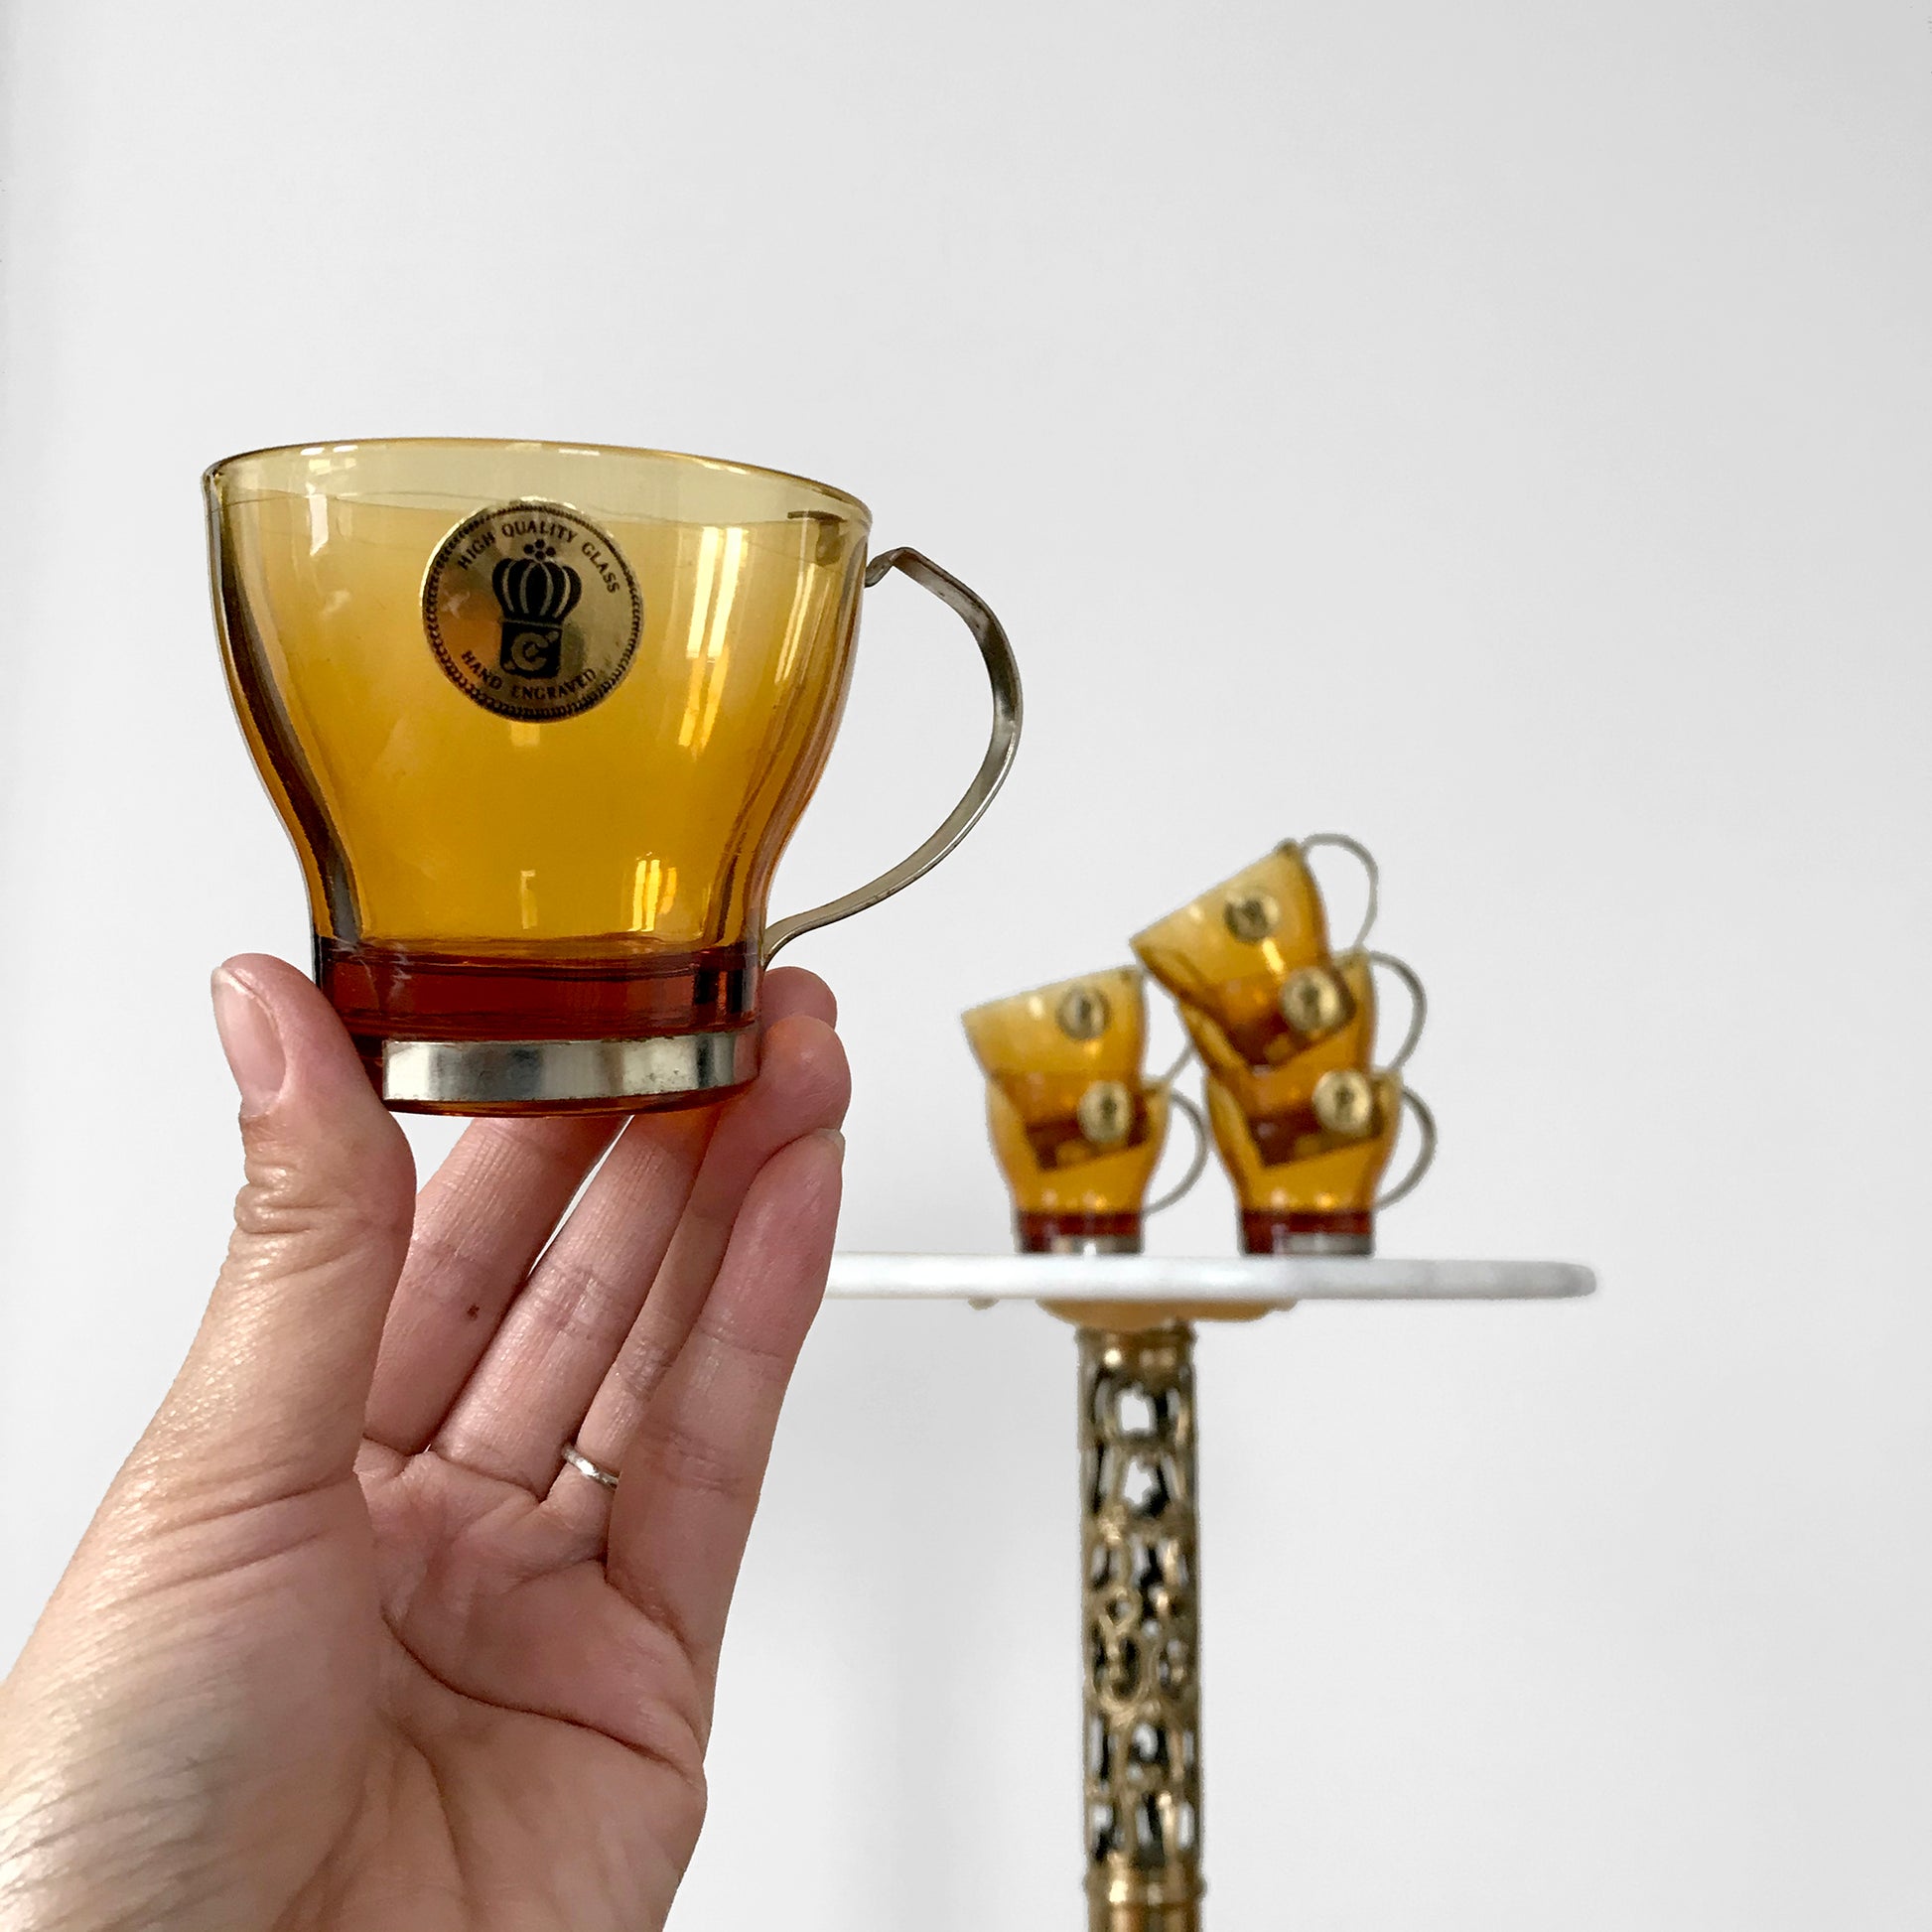 This Amber Glass Coffee Mug Has a Cool Mid-Century Design